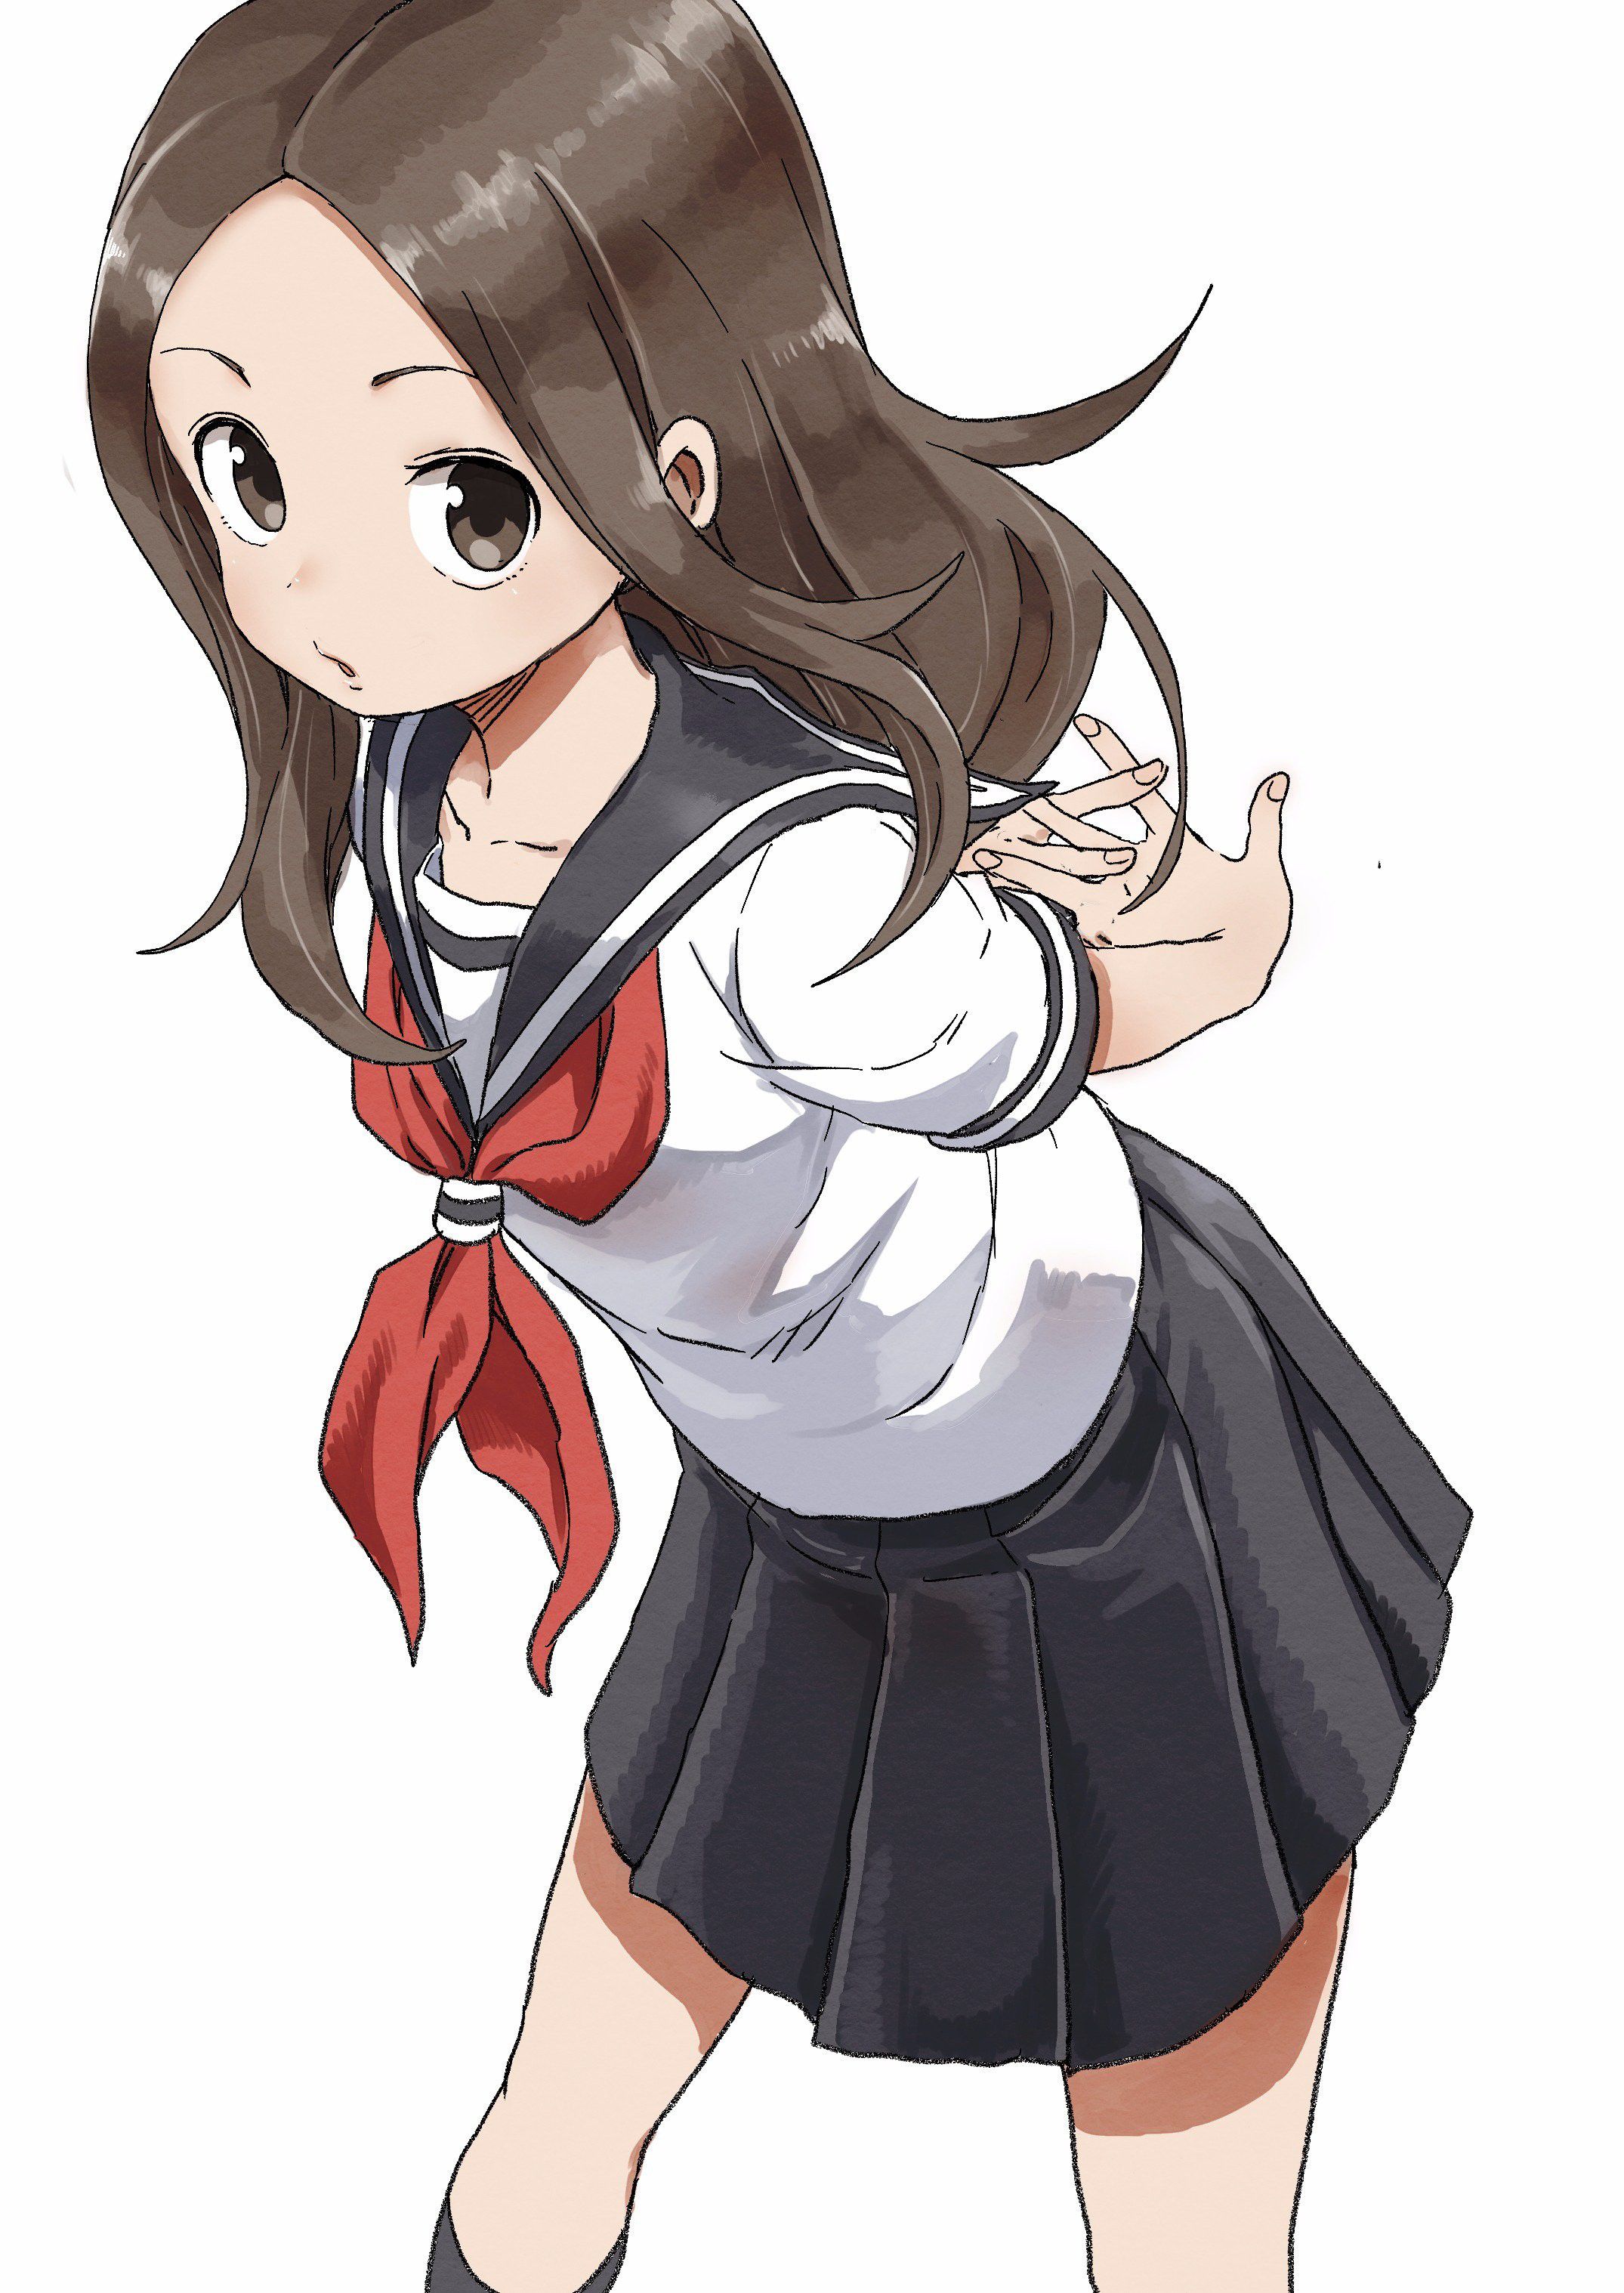 [Secondary] secondary image of a pretty girl wearing a school uniform Part 10 [uniform, non-erotic] 25